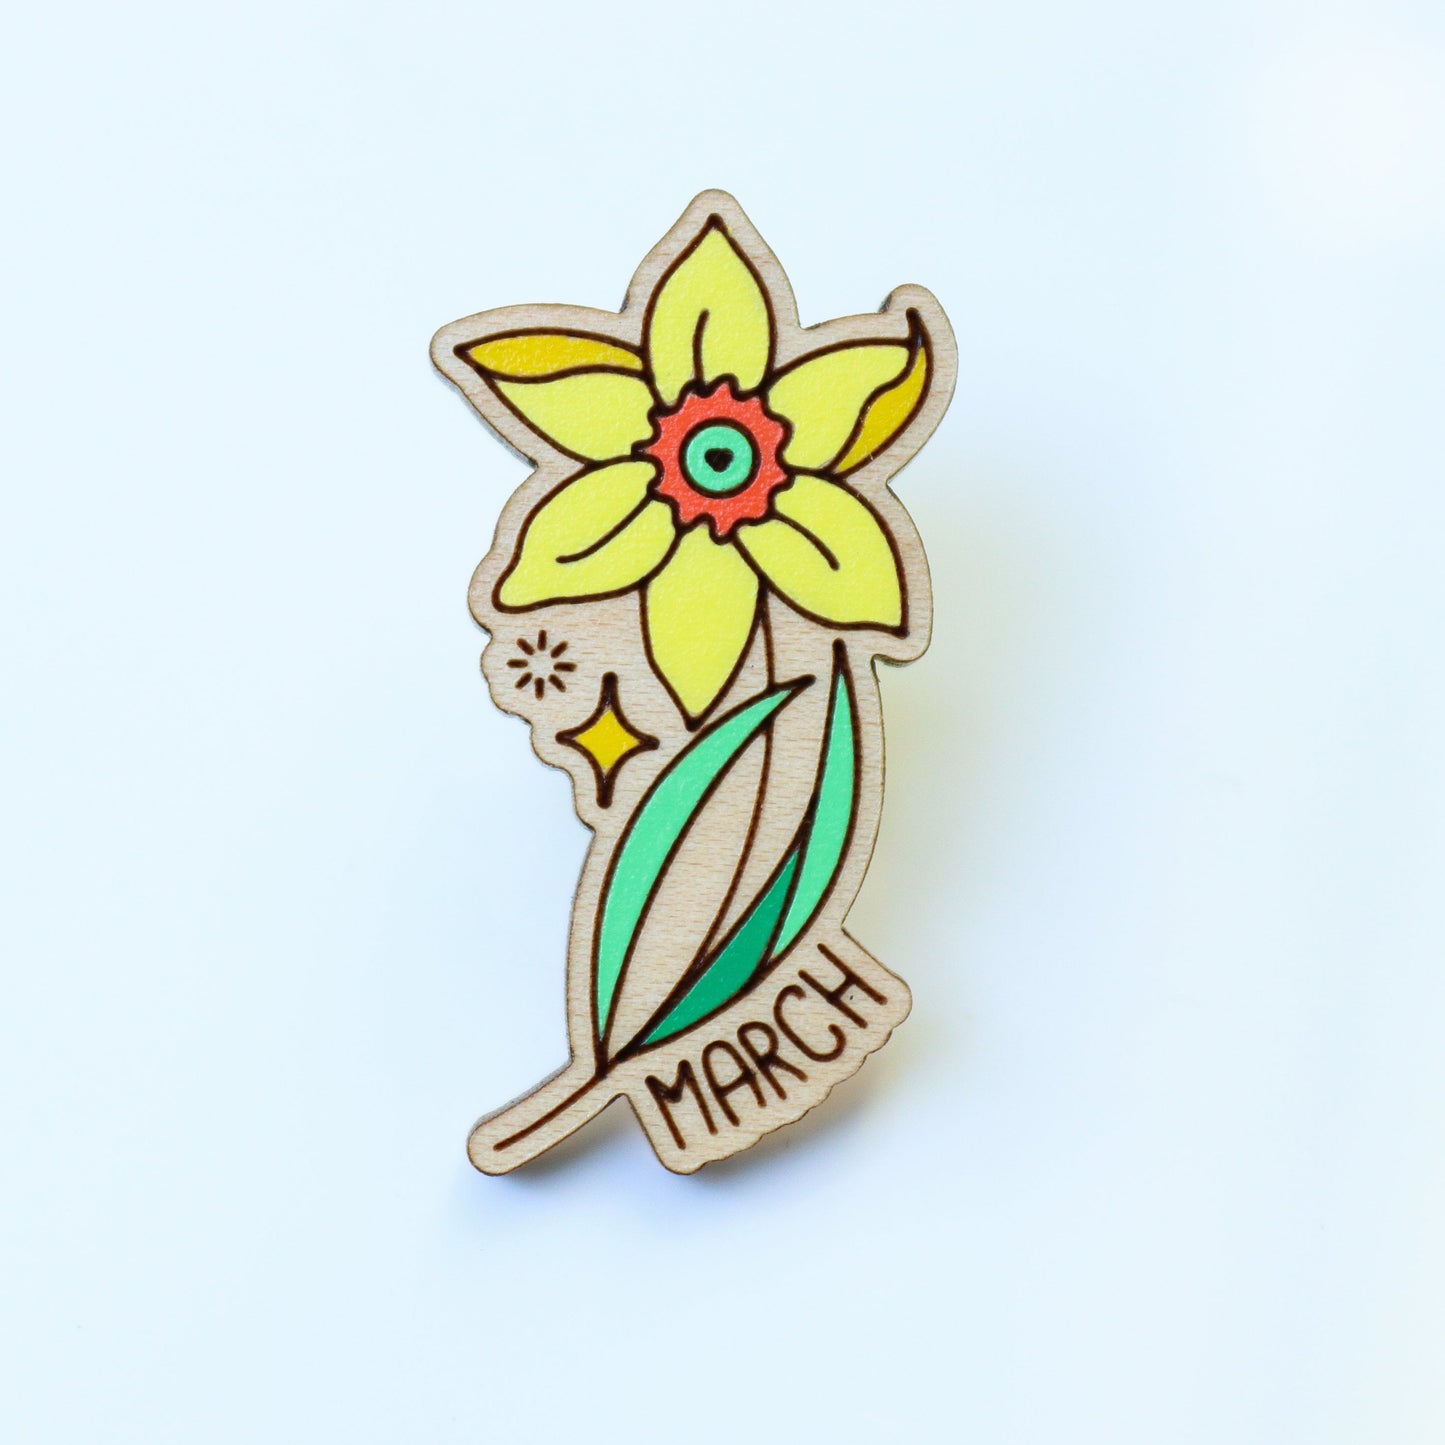 March Birth Month Flower Pin - Daffodil